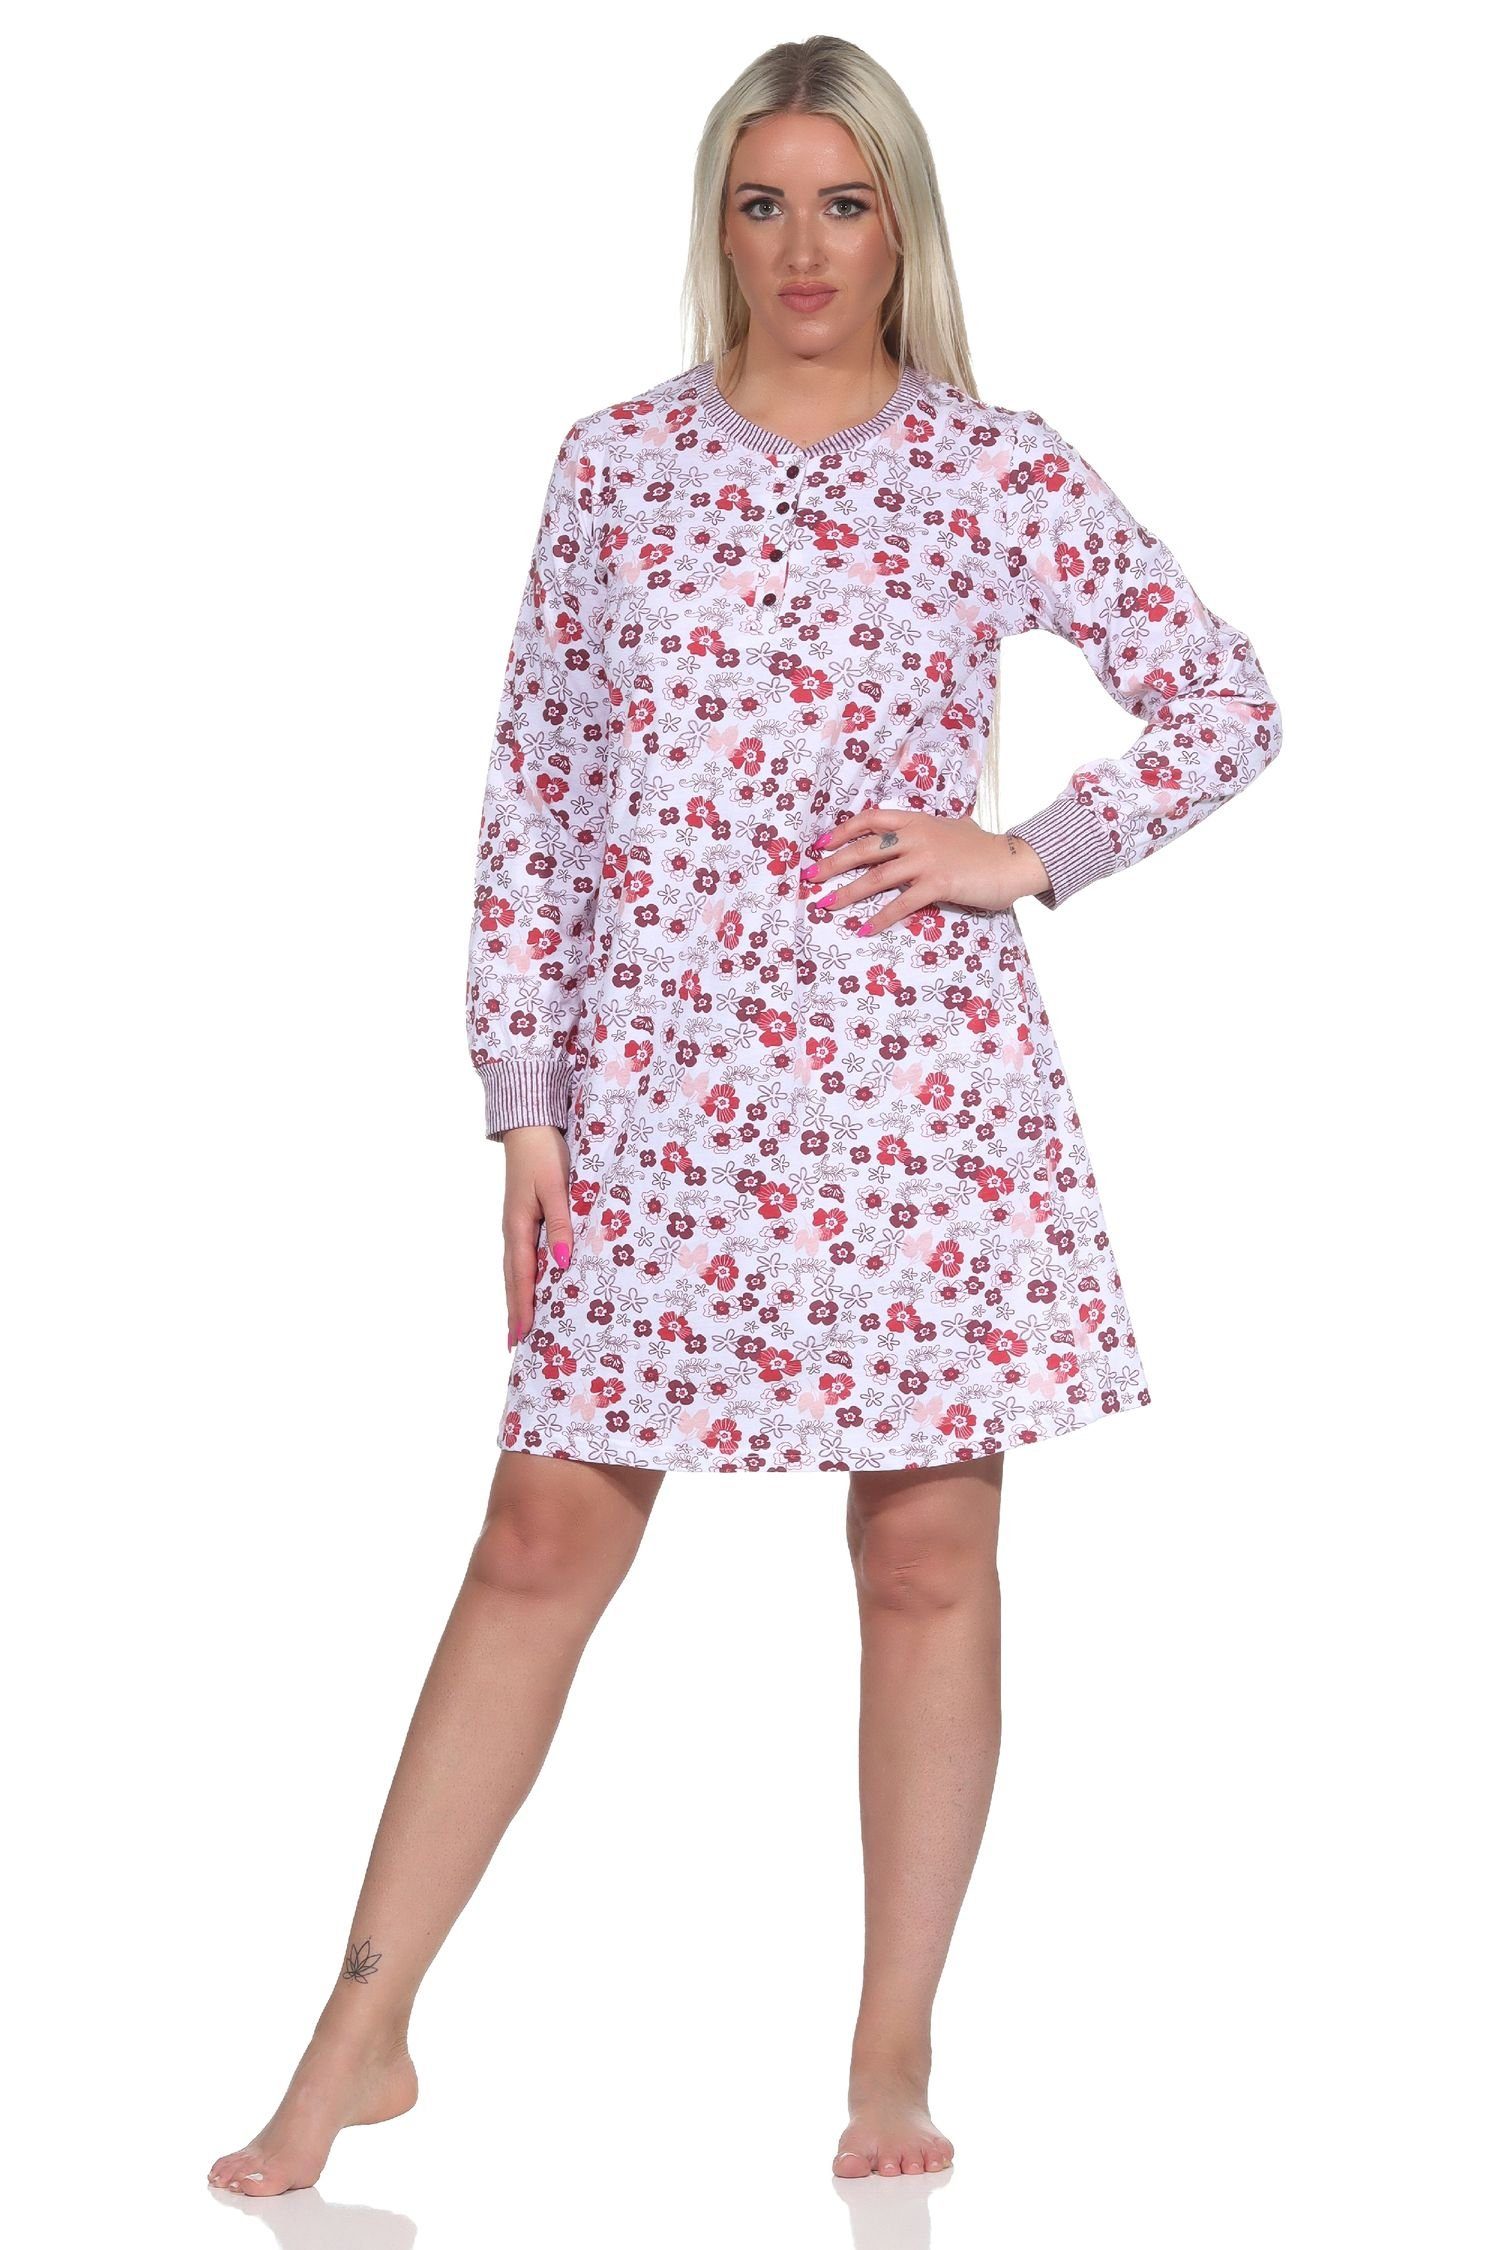 Normann Nachthemd Damen Nachthemd langarm mit Bündchen an den Ärmeln in floraler Optik beere